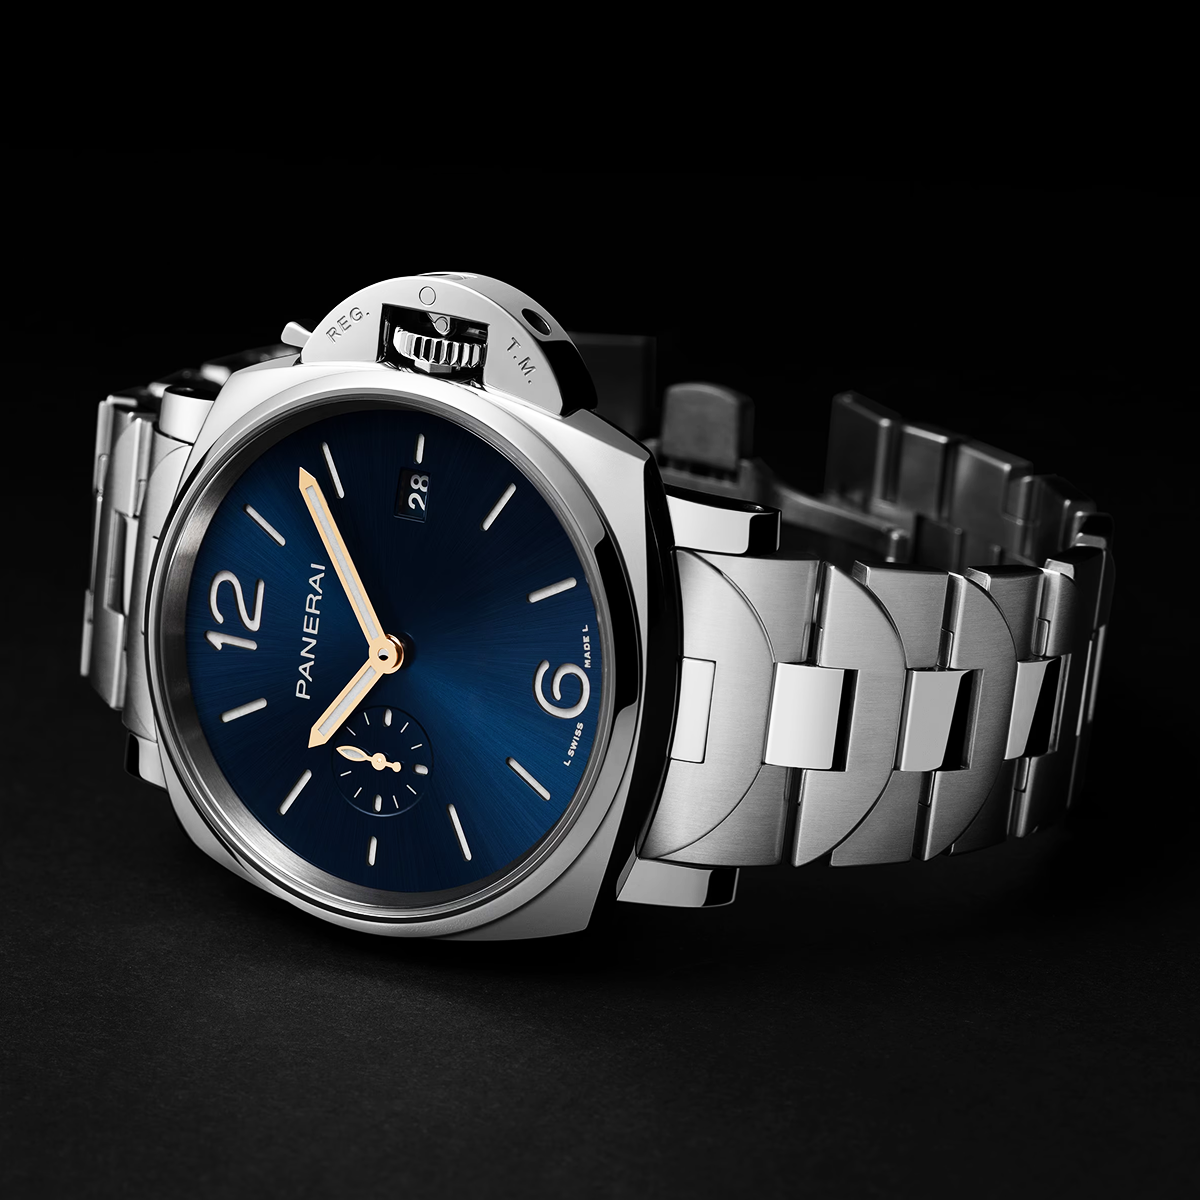 Luminor Due 42mm Blue/Rose Dial Automatic Bracelet Watch